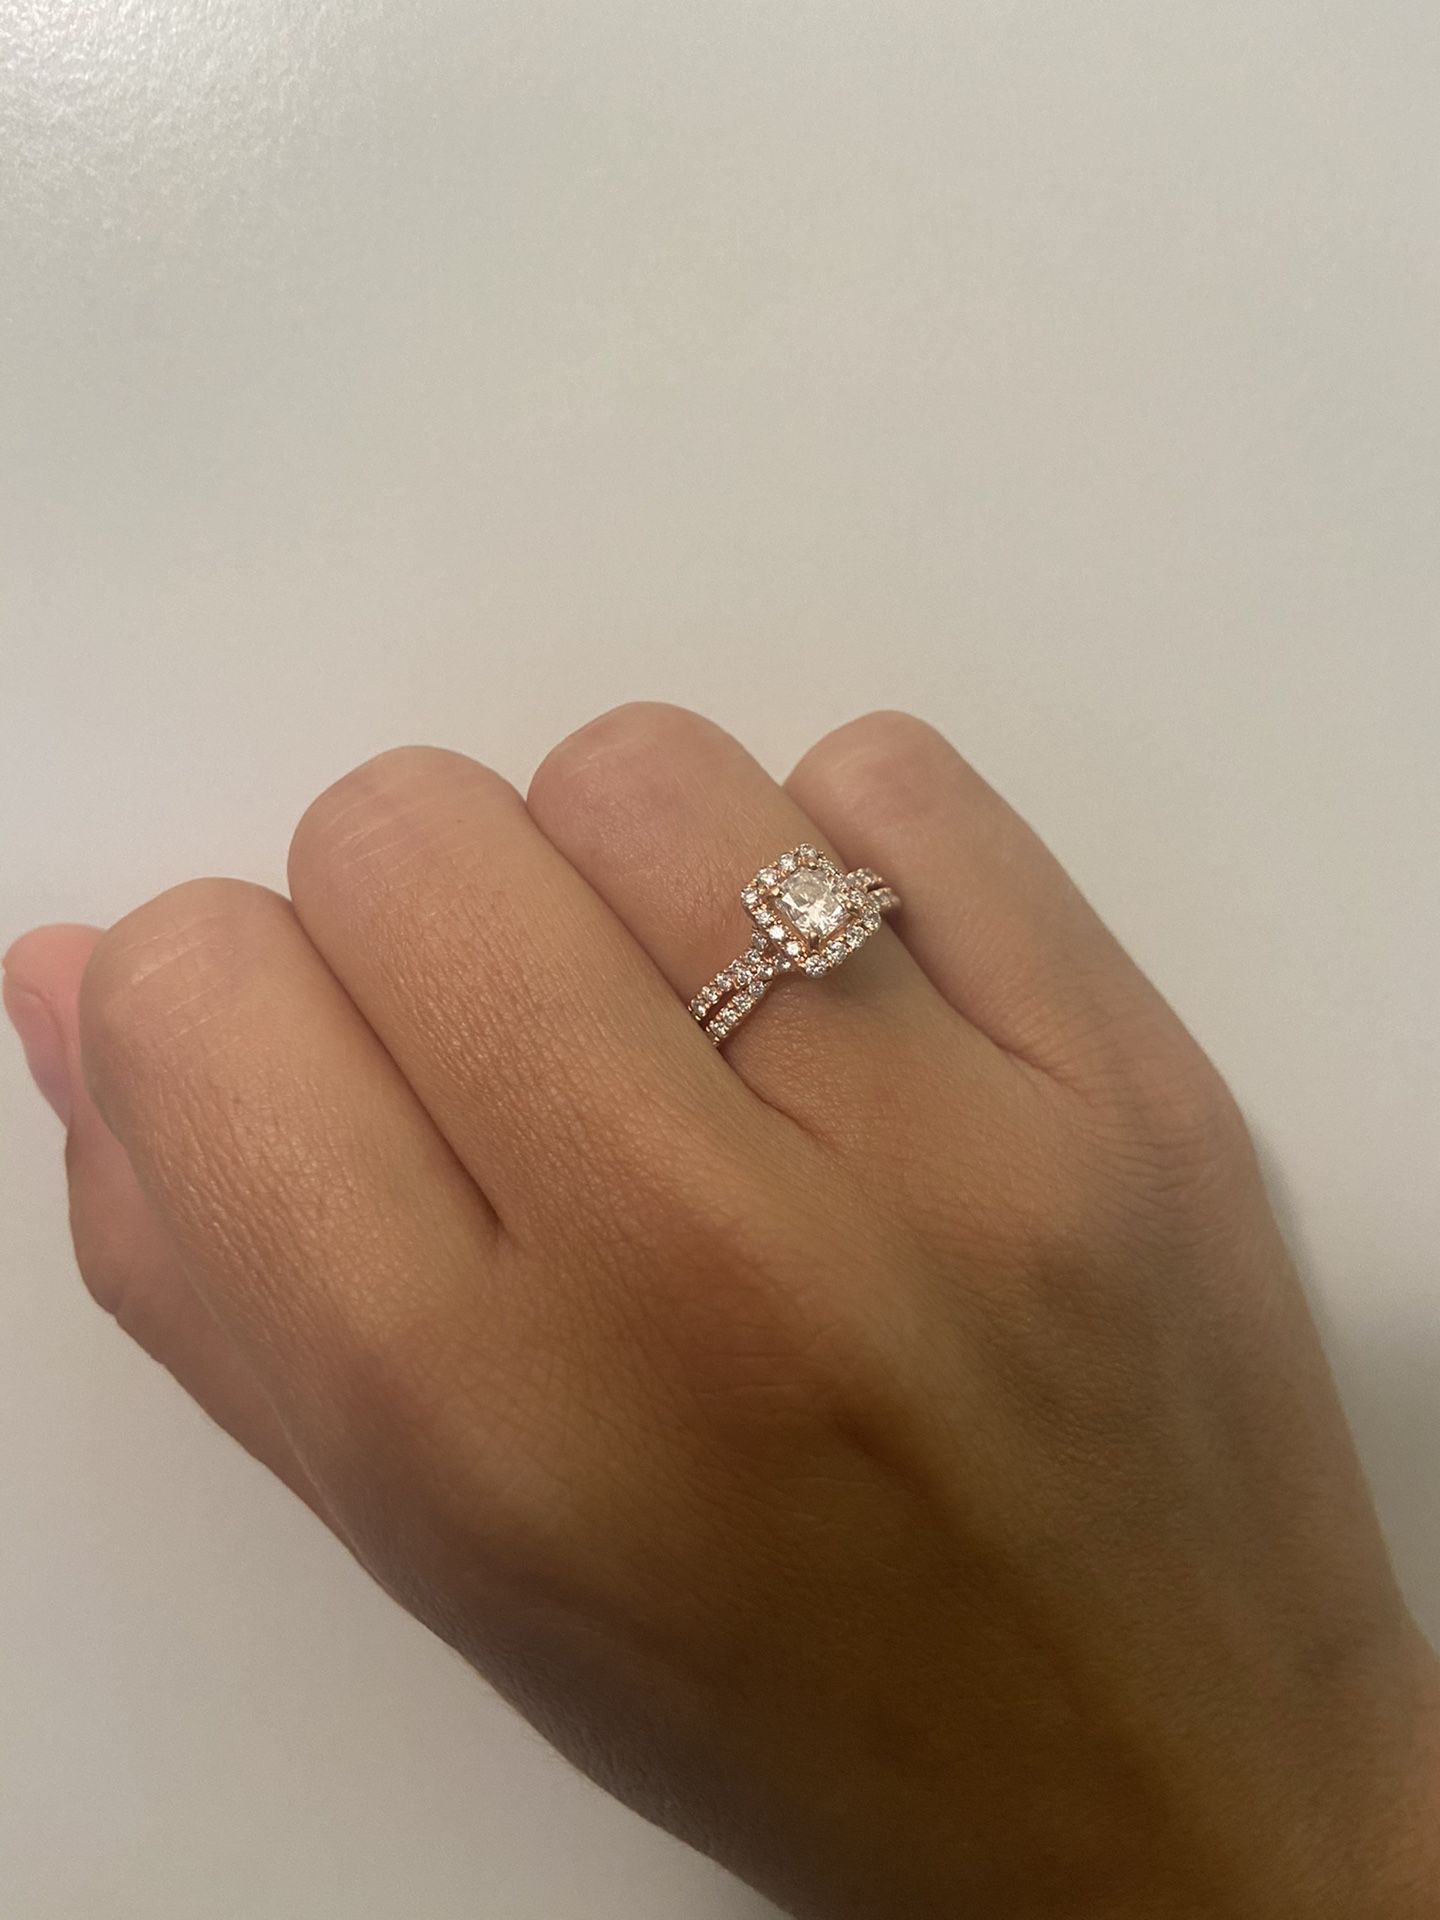 Rose Gold Diamond Ring - Size 6.25